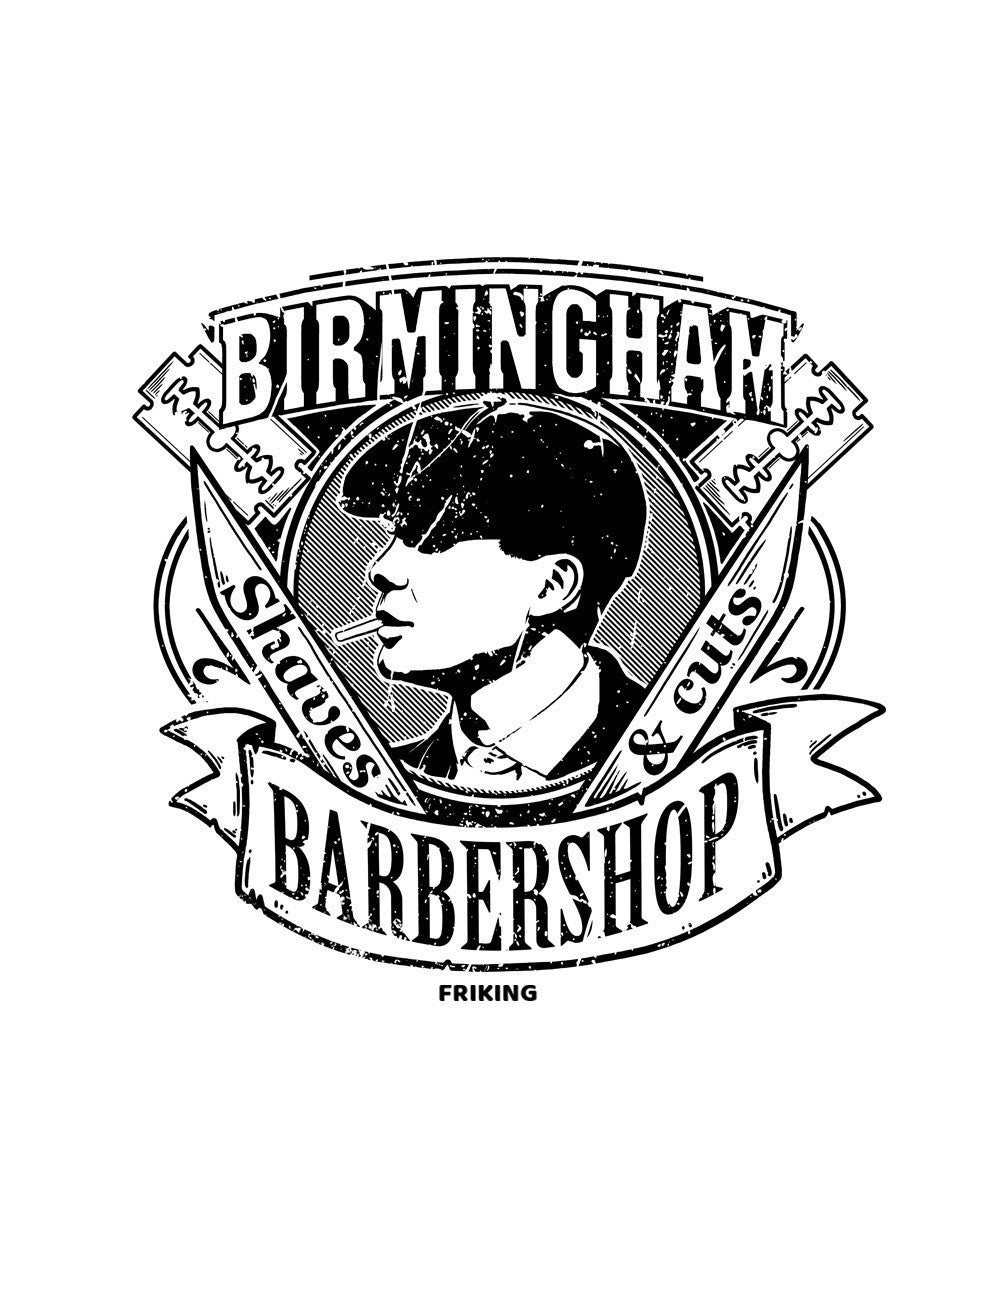  Birmingham barbershop 